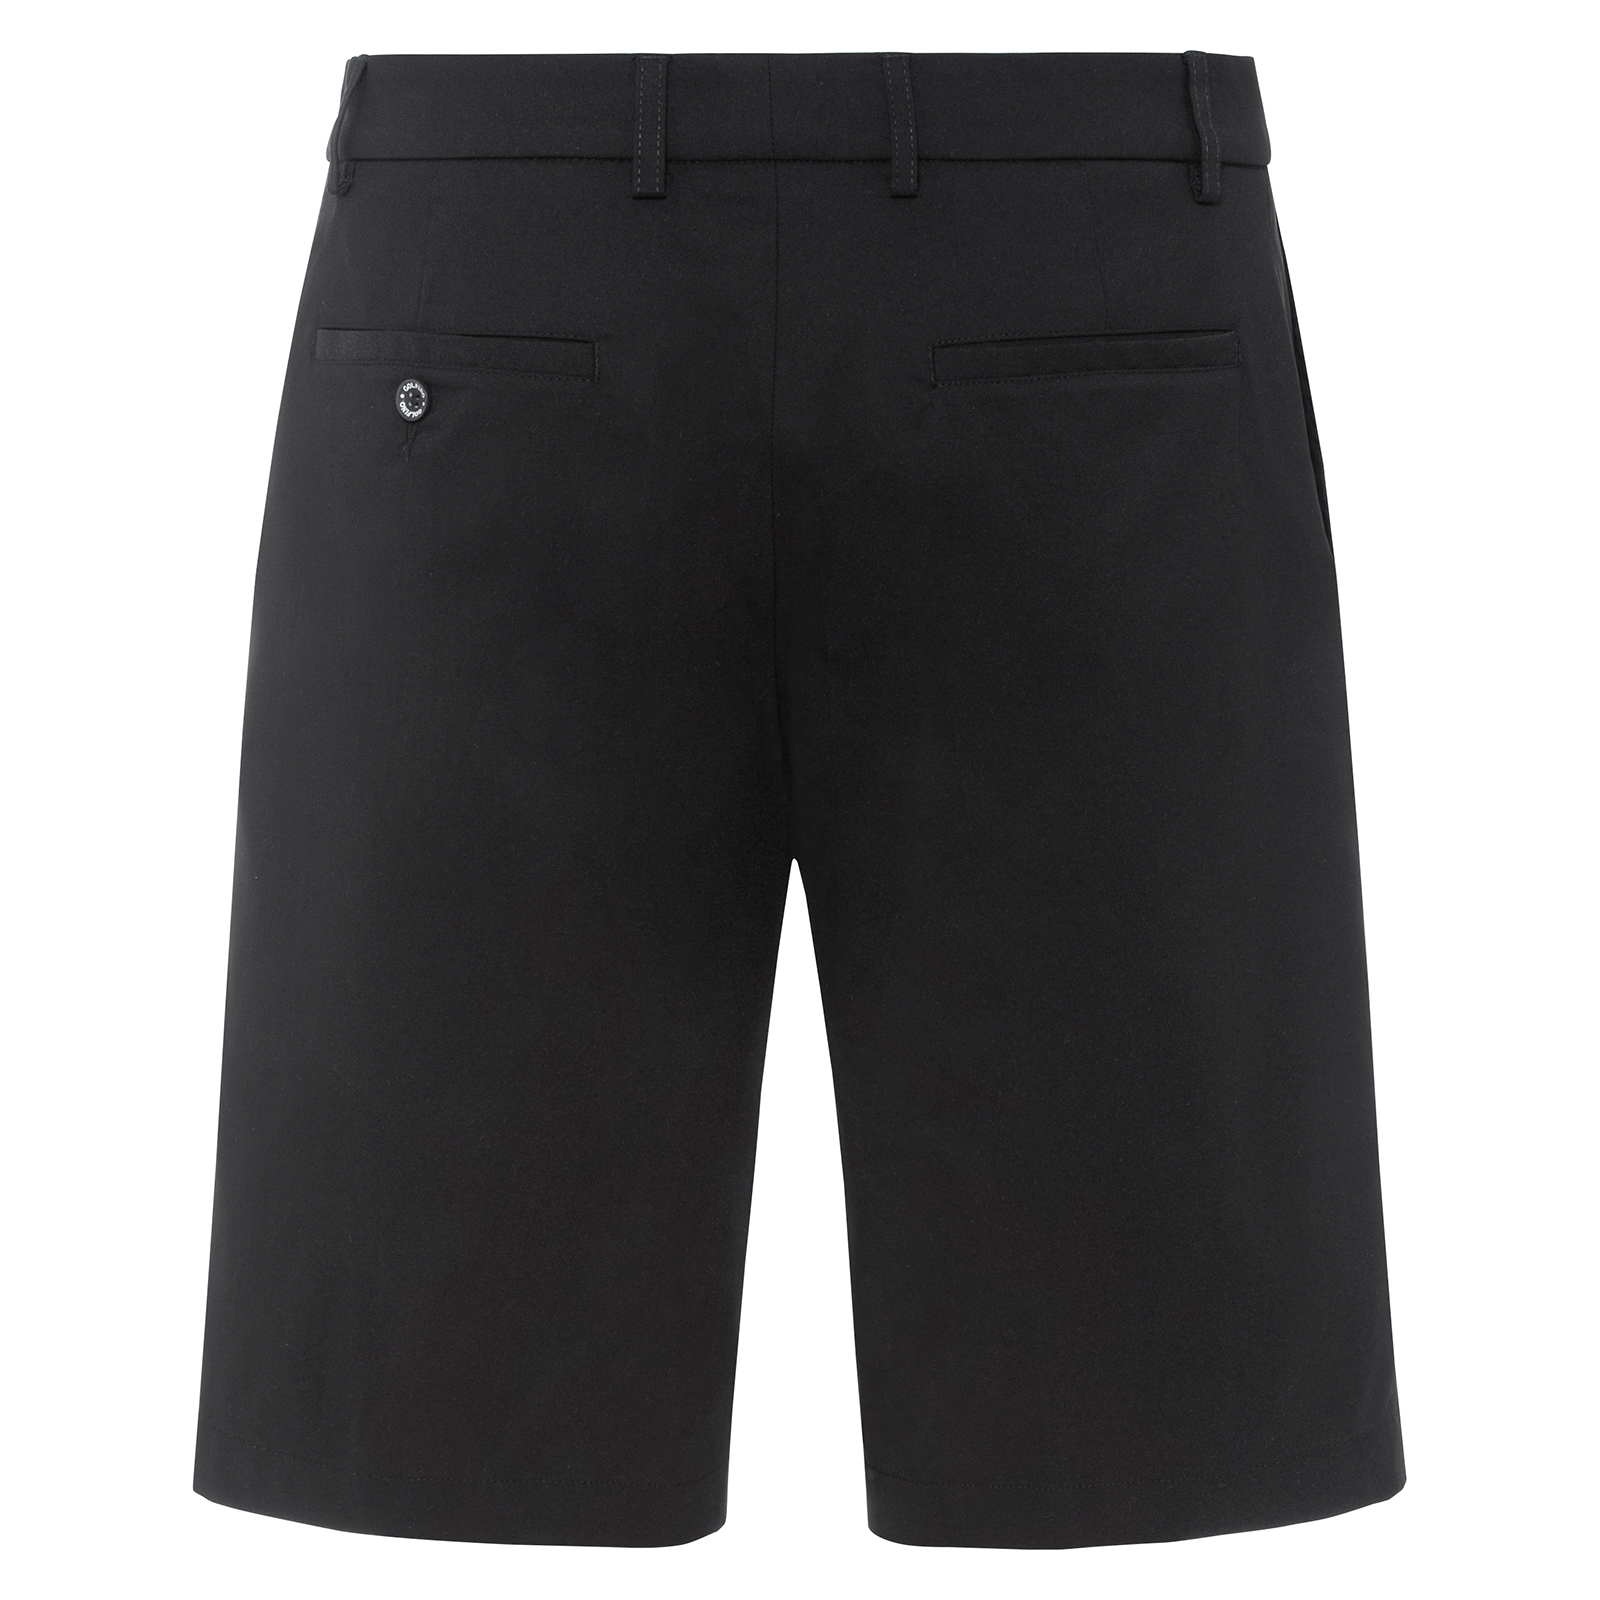 Flexible men's golf Bermuda shorts with stretch elements